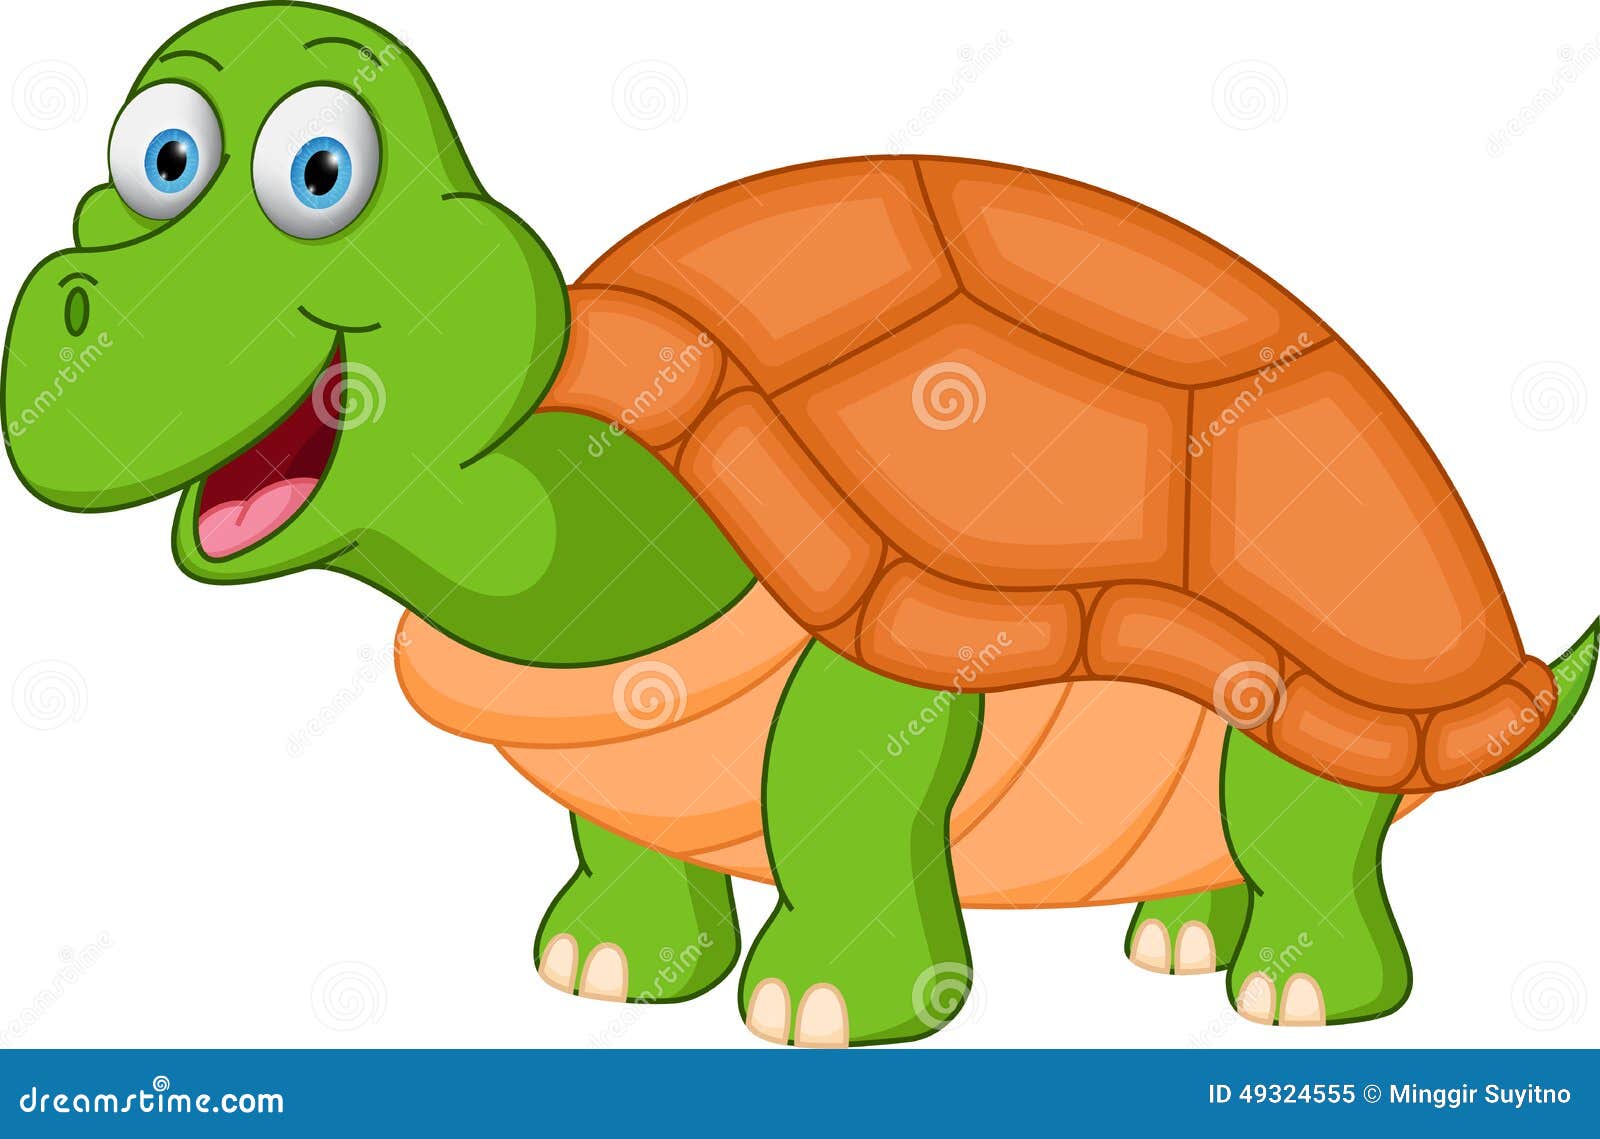 happy turtle clipart